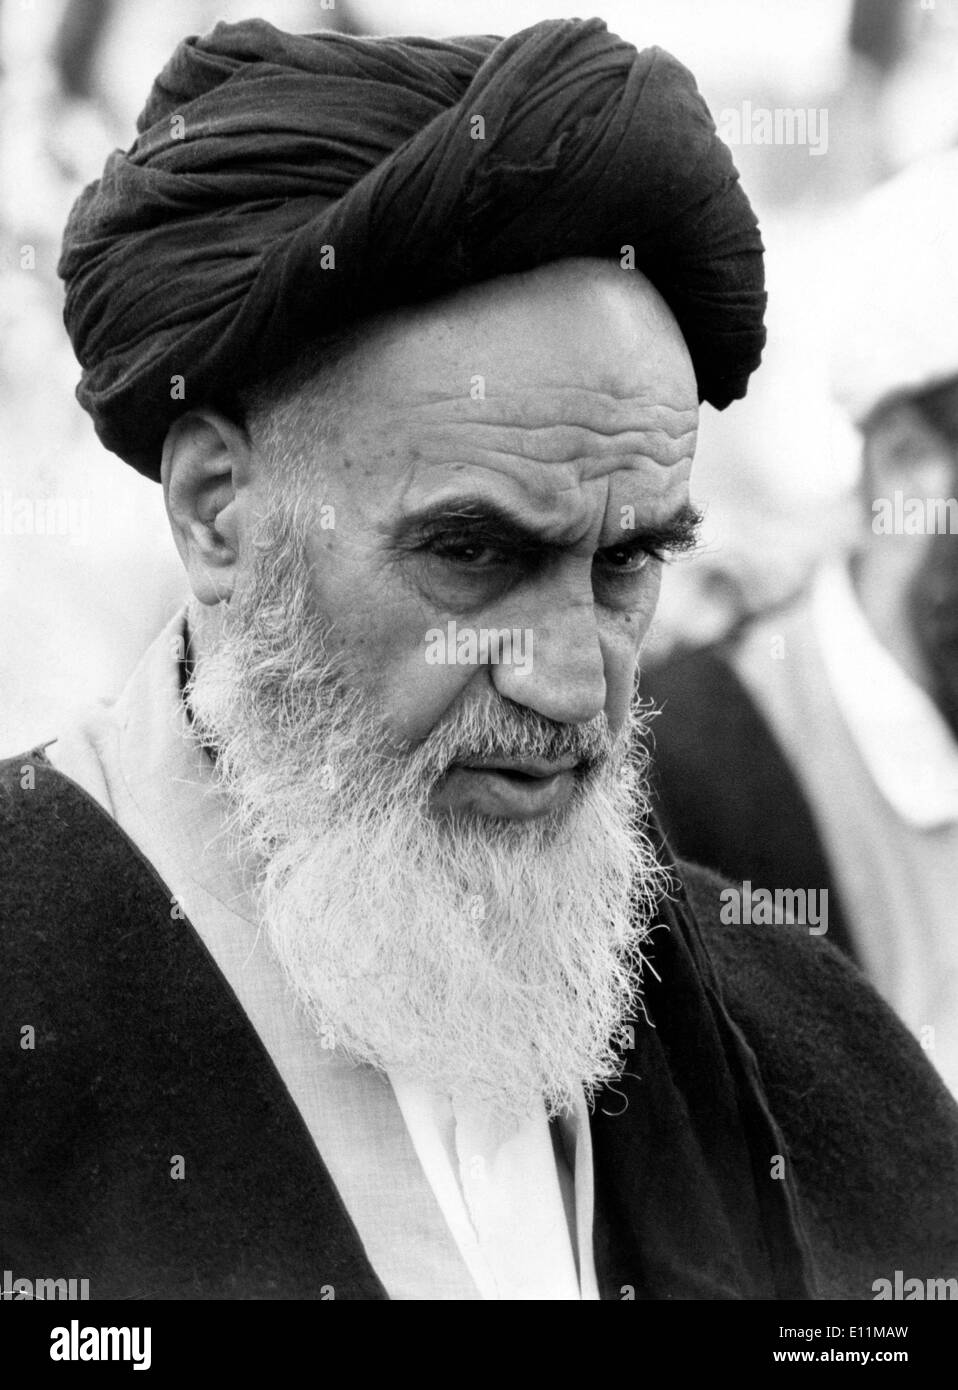 5214300 (900326) Ajatollah KHOMEINI, (24.09.1902 - 03.06.1989, Ruhollah Mussawi HENDI) iranischer Religionsf hrer und Stock Photo